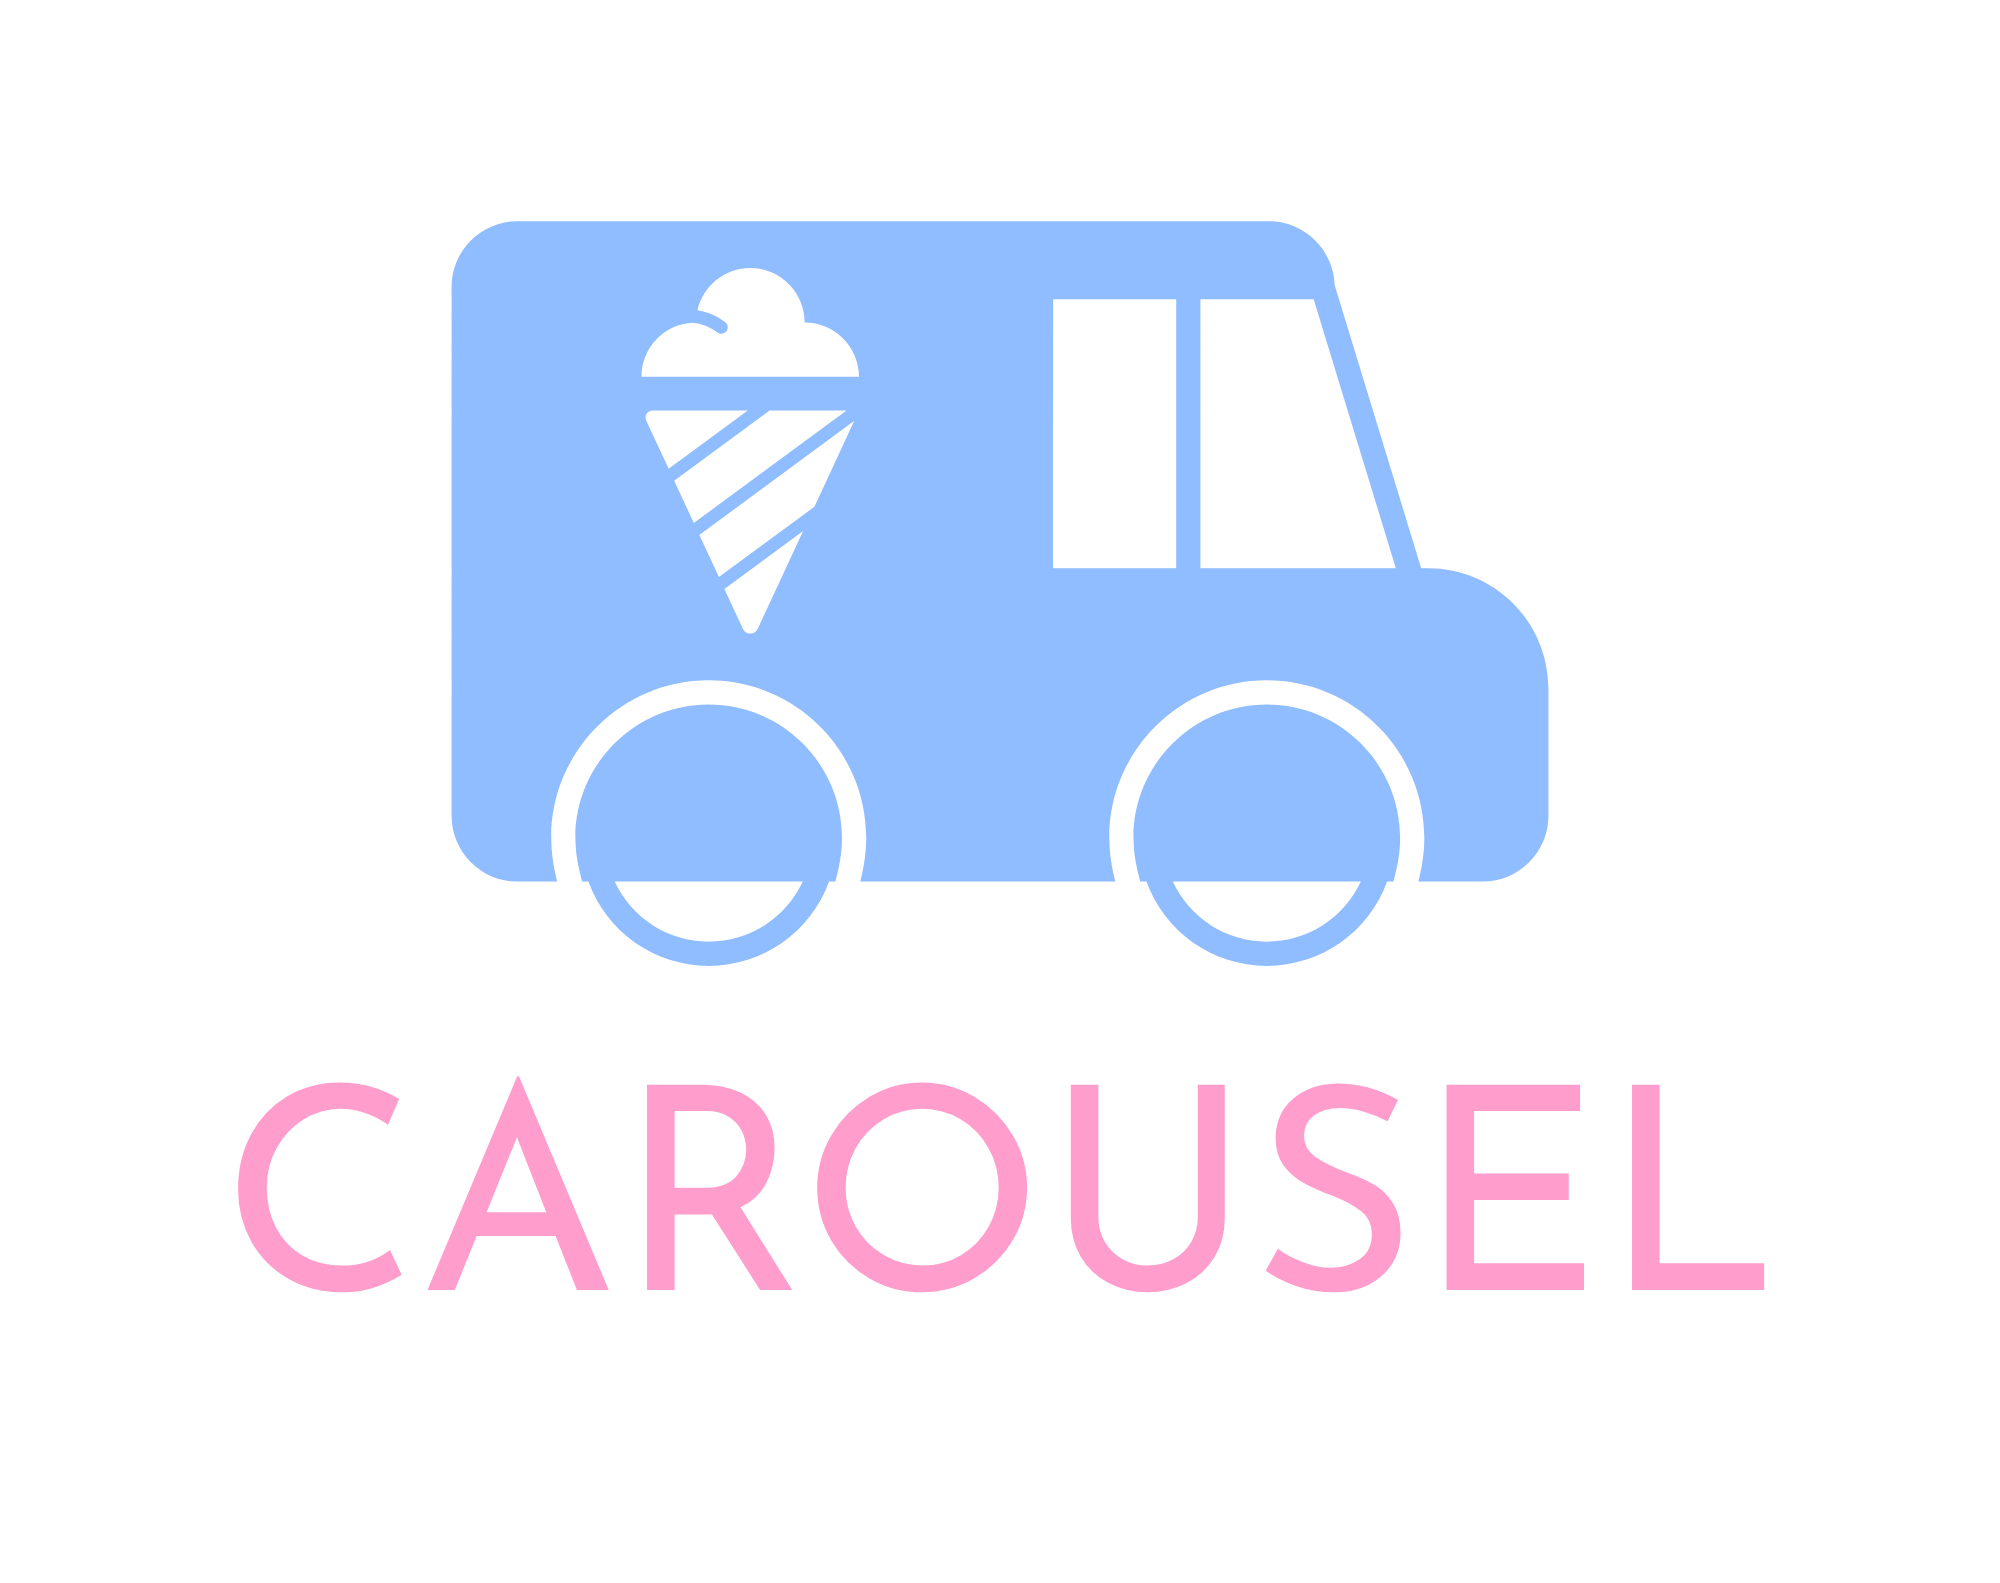 Carousel (Copy)